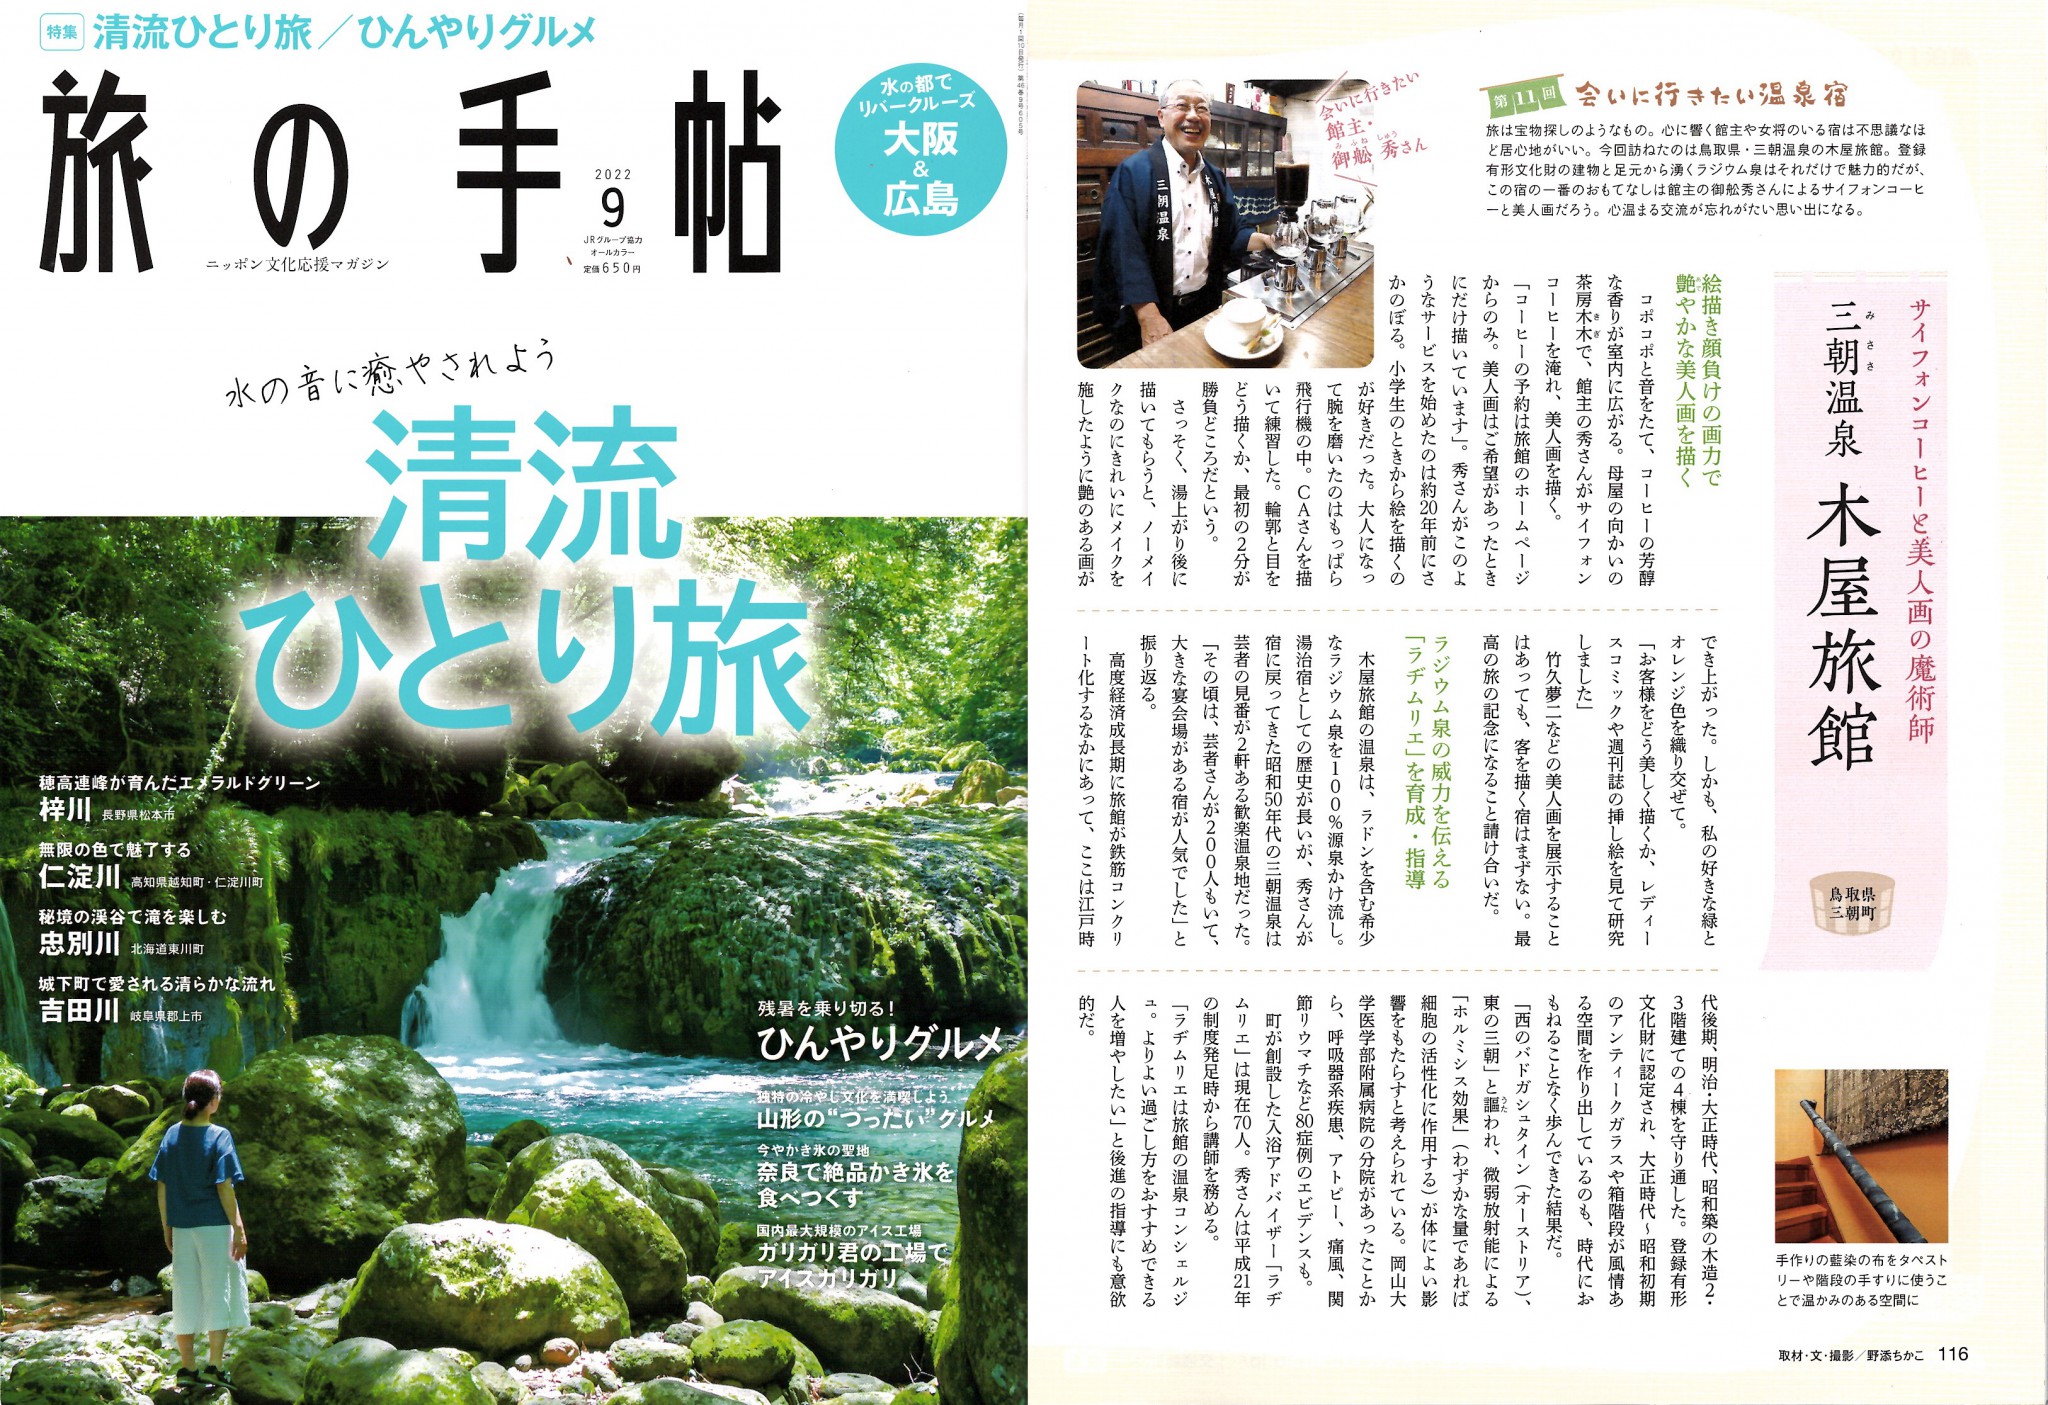 Tabi no Techō September issue